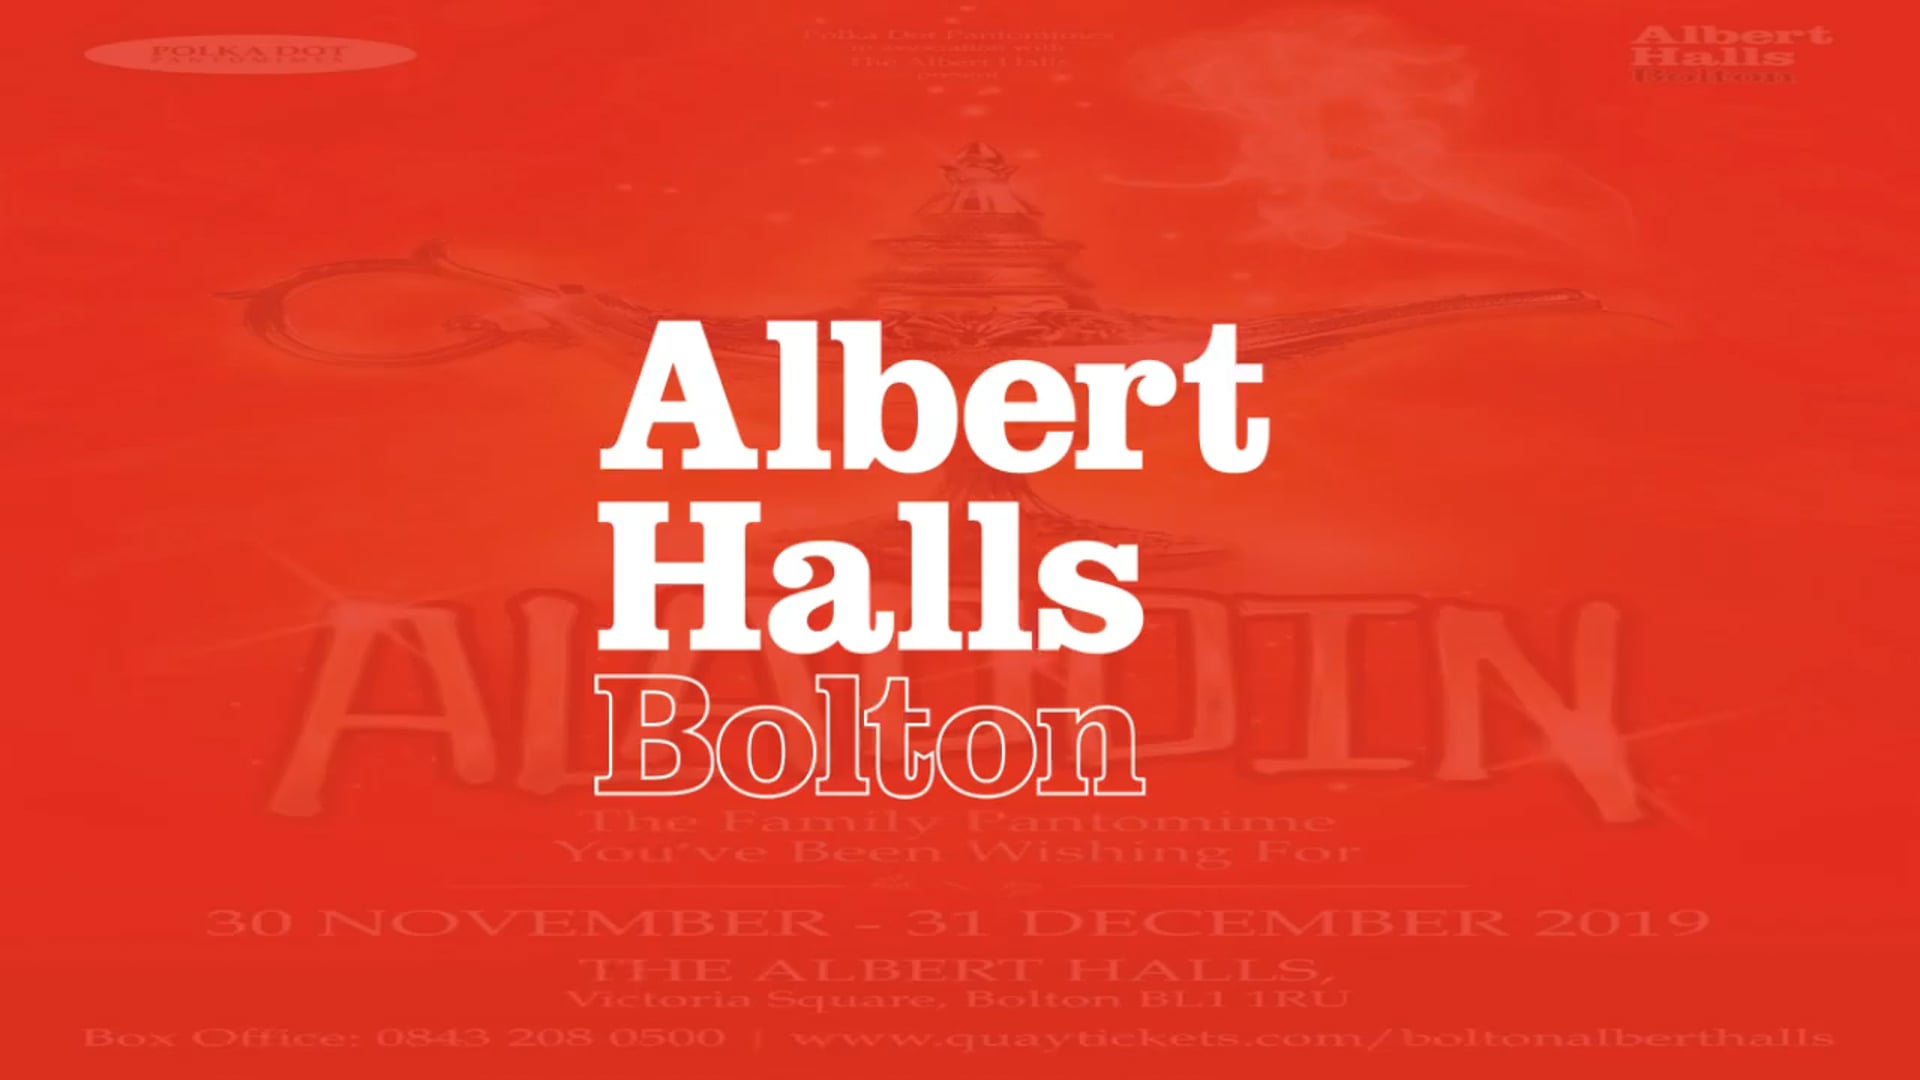 Aladdin @ The Albert Halls Bolton from 30th Nov-31st Dec BOOK NOW 0843 208 0500